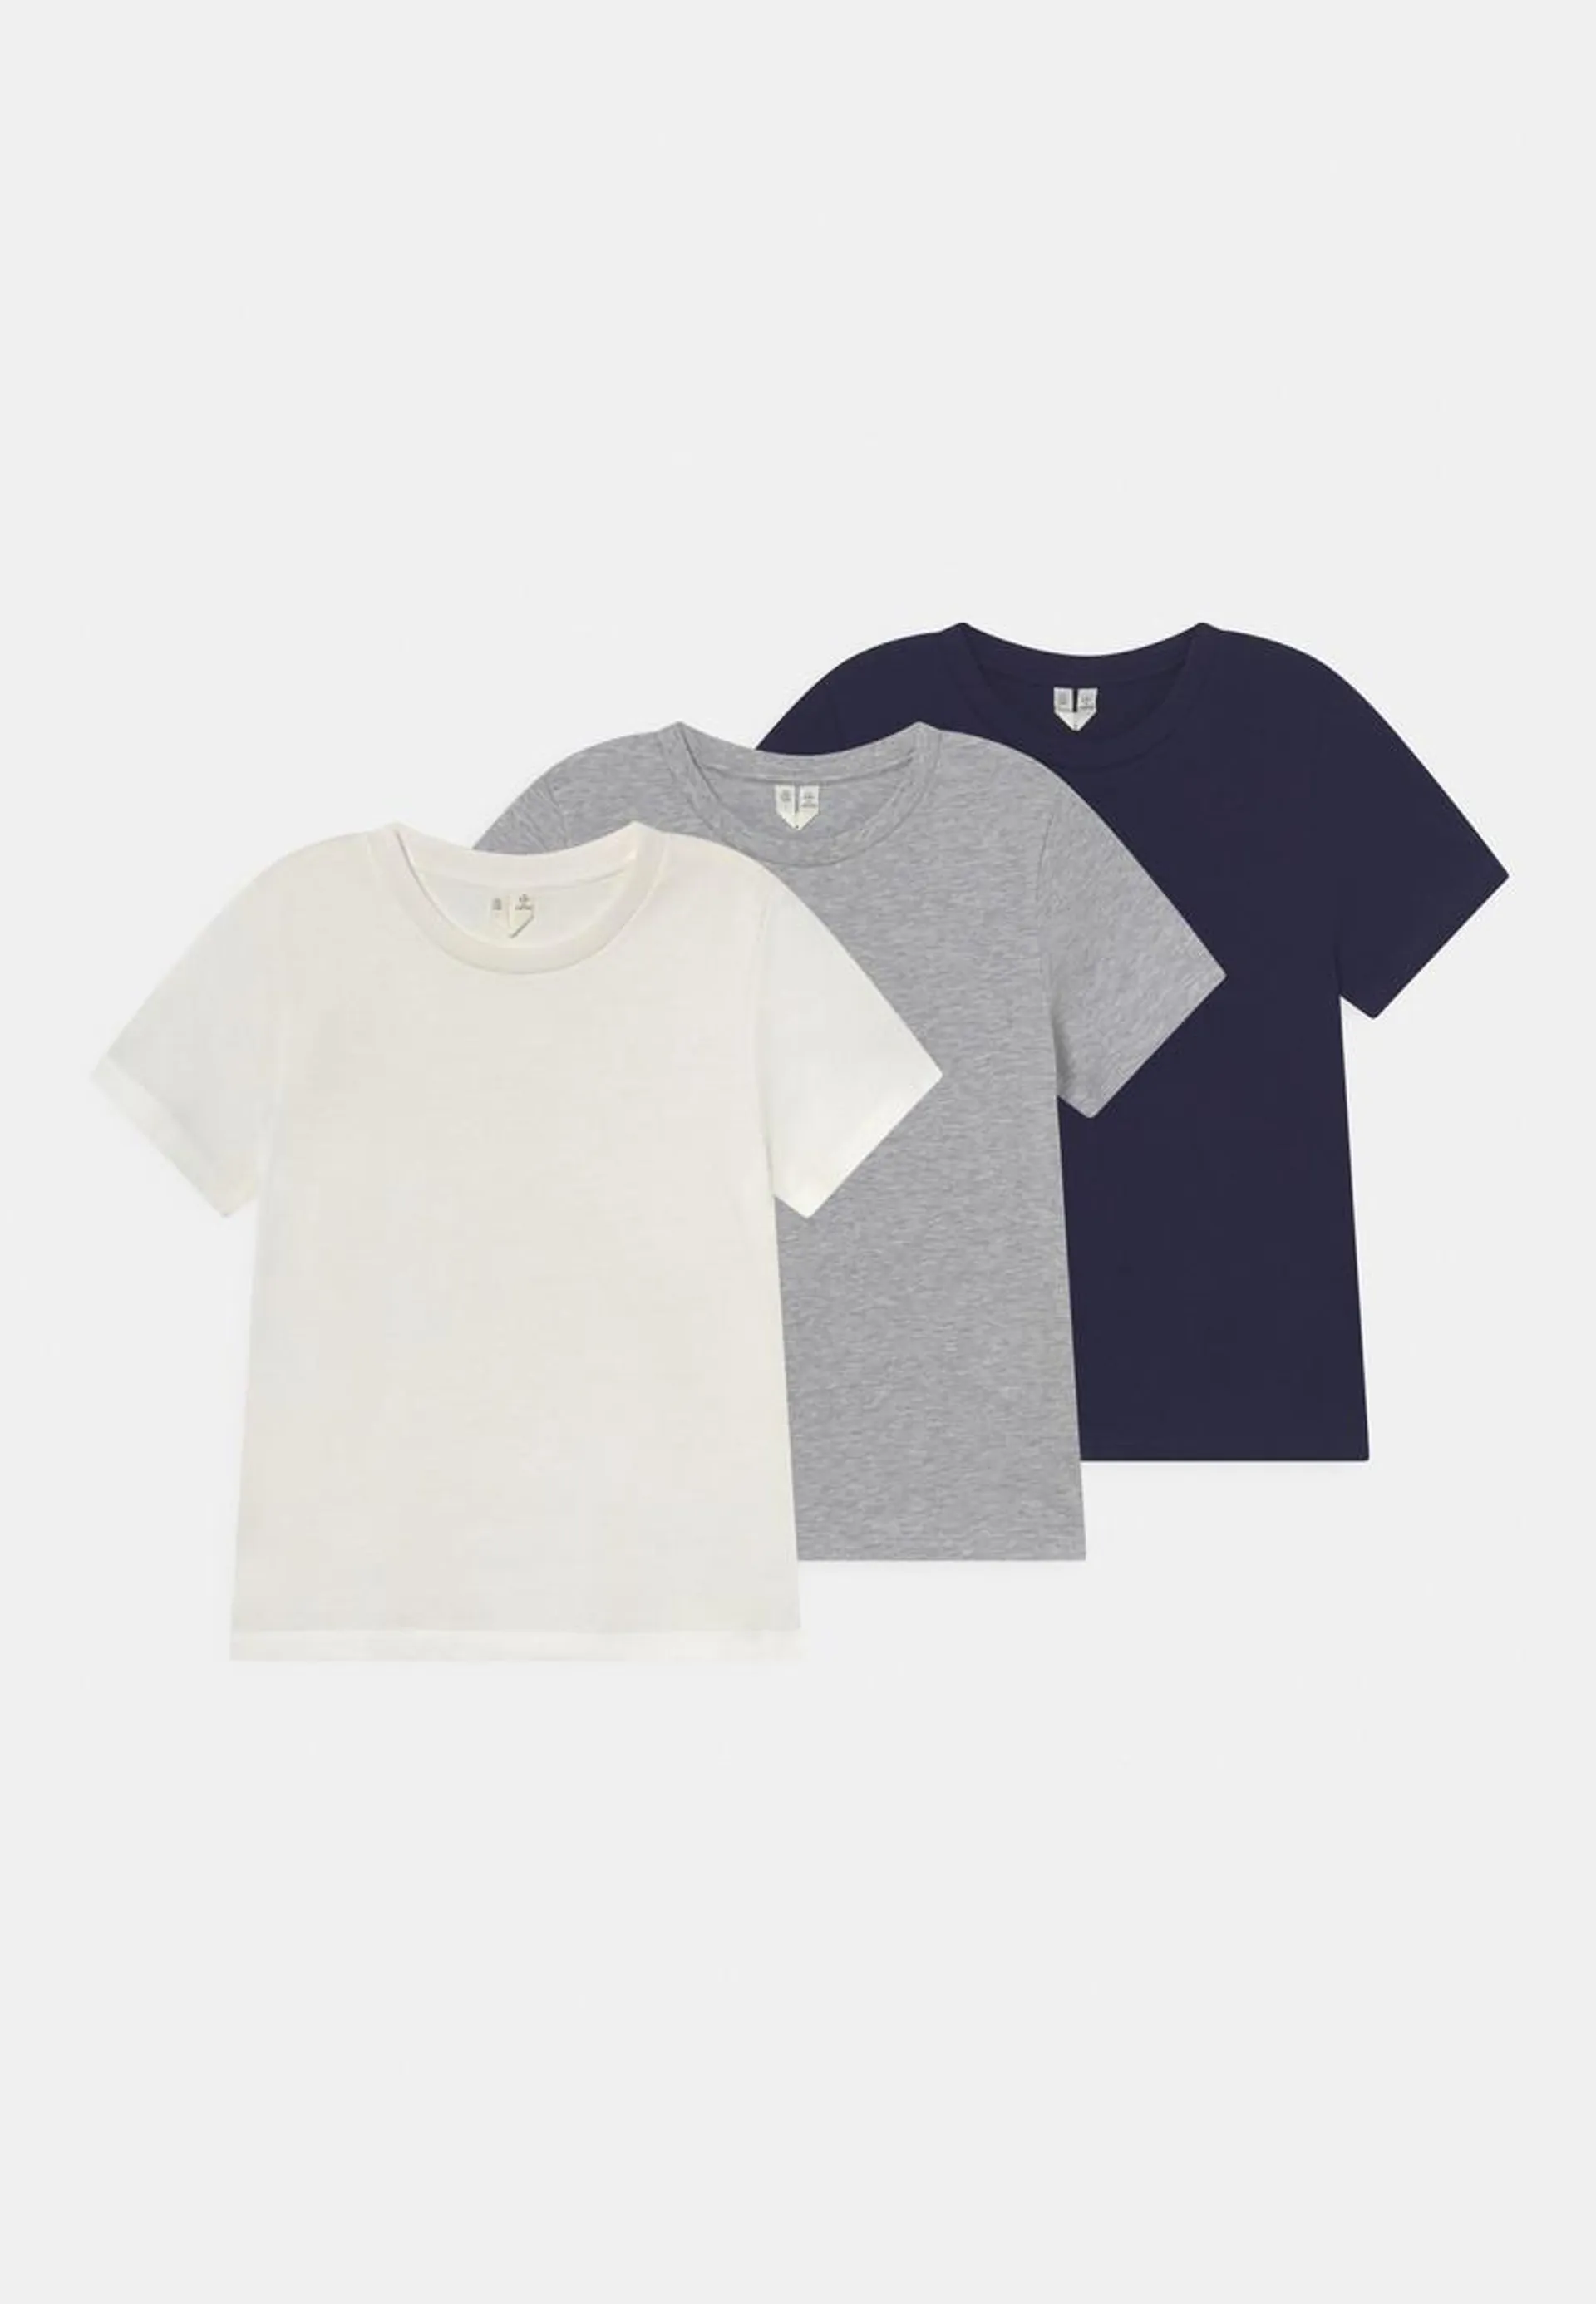 3 PACK UNISEX - Basic T-shirt